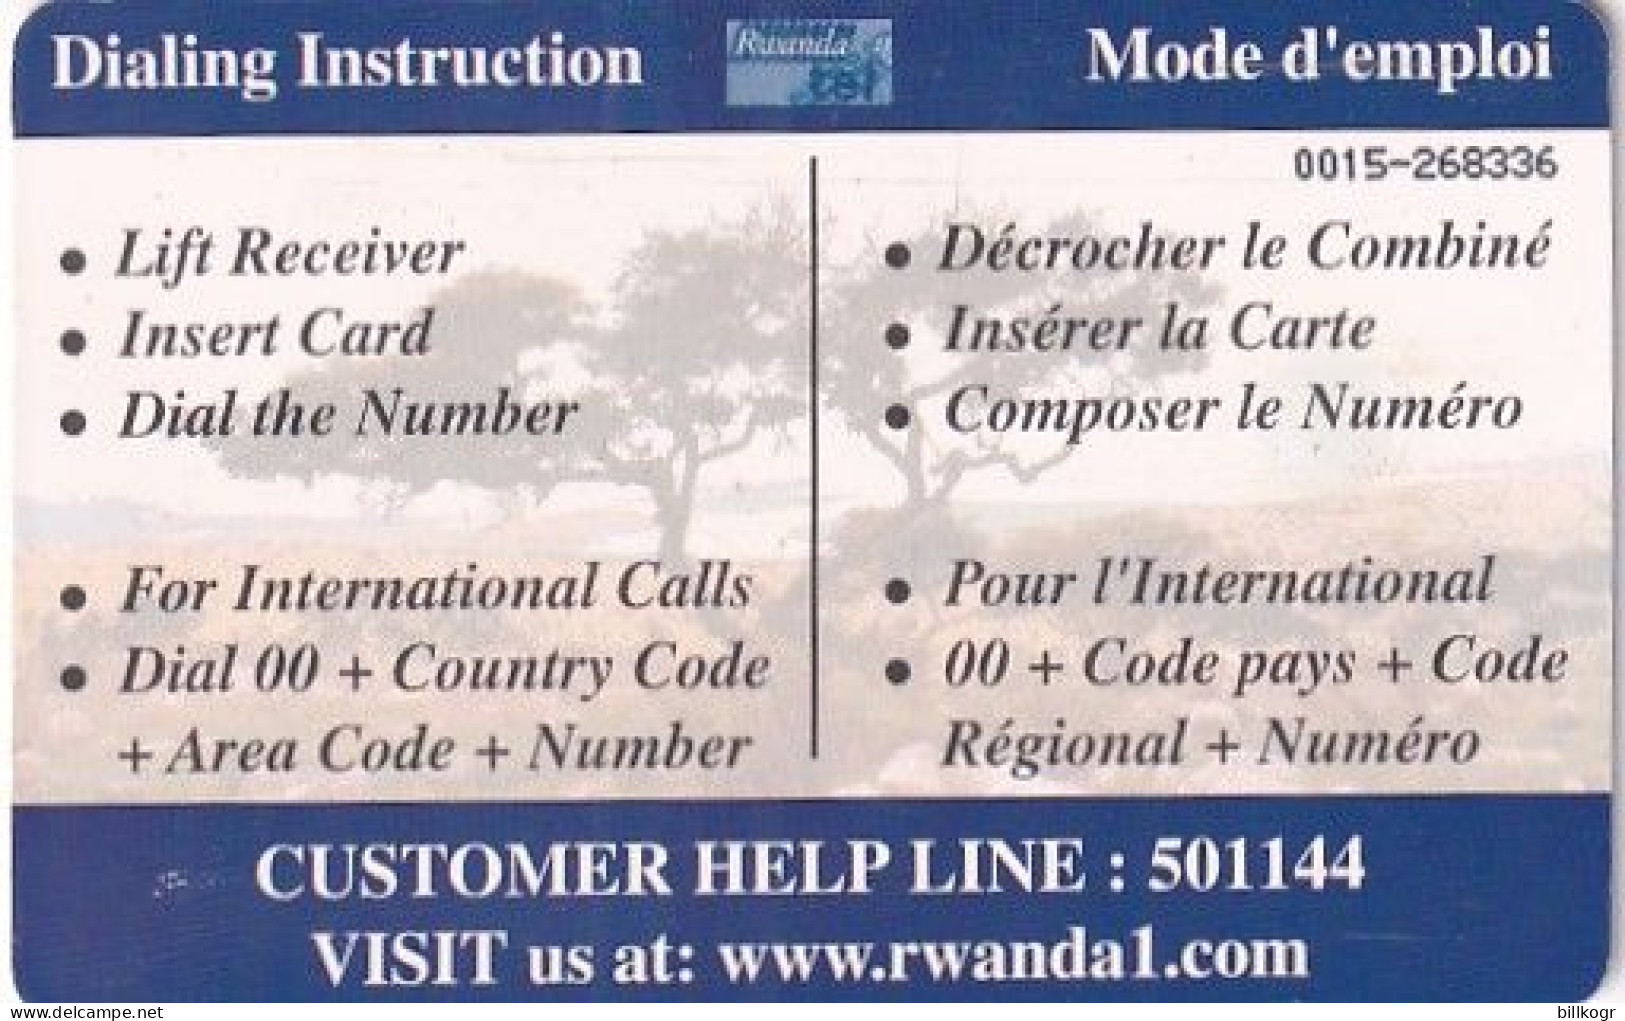 RWANDA - Akagera, First Chip Issue 1500 Frw, Used - Rwanda